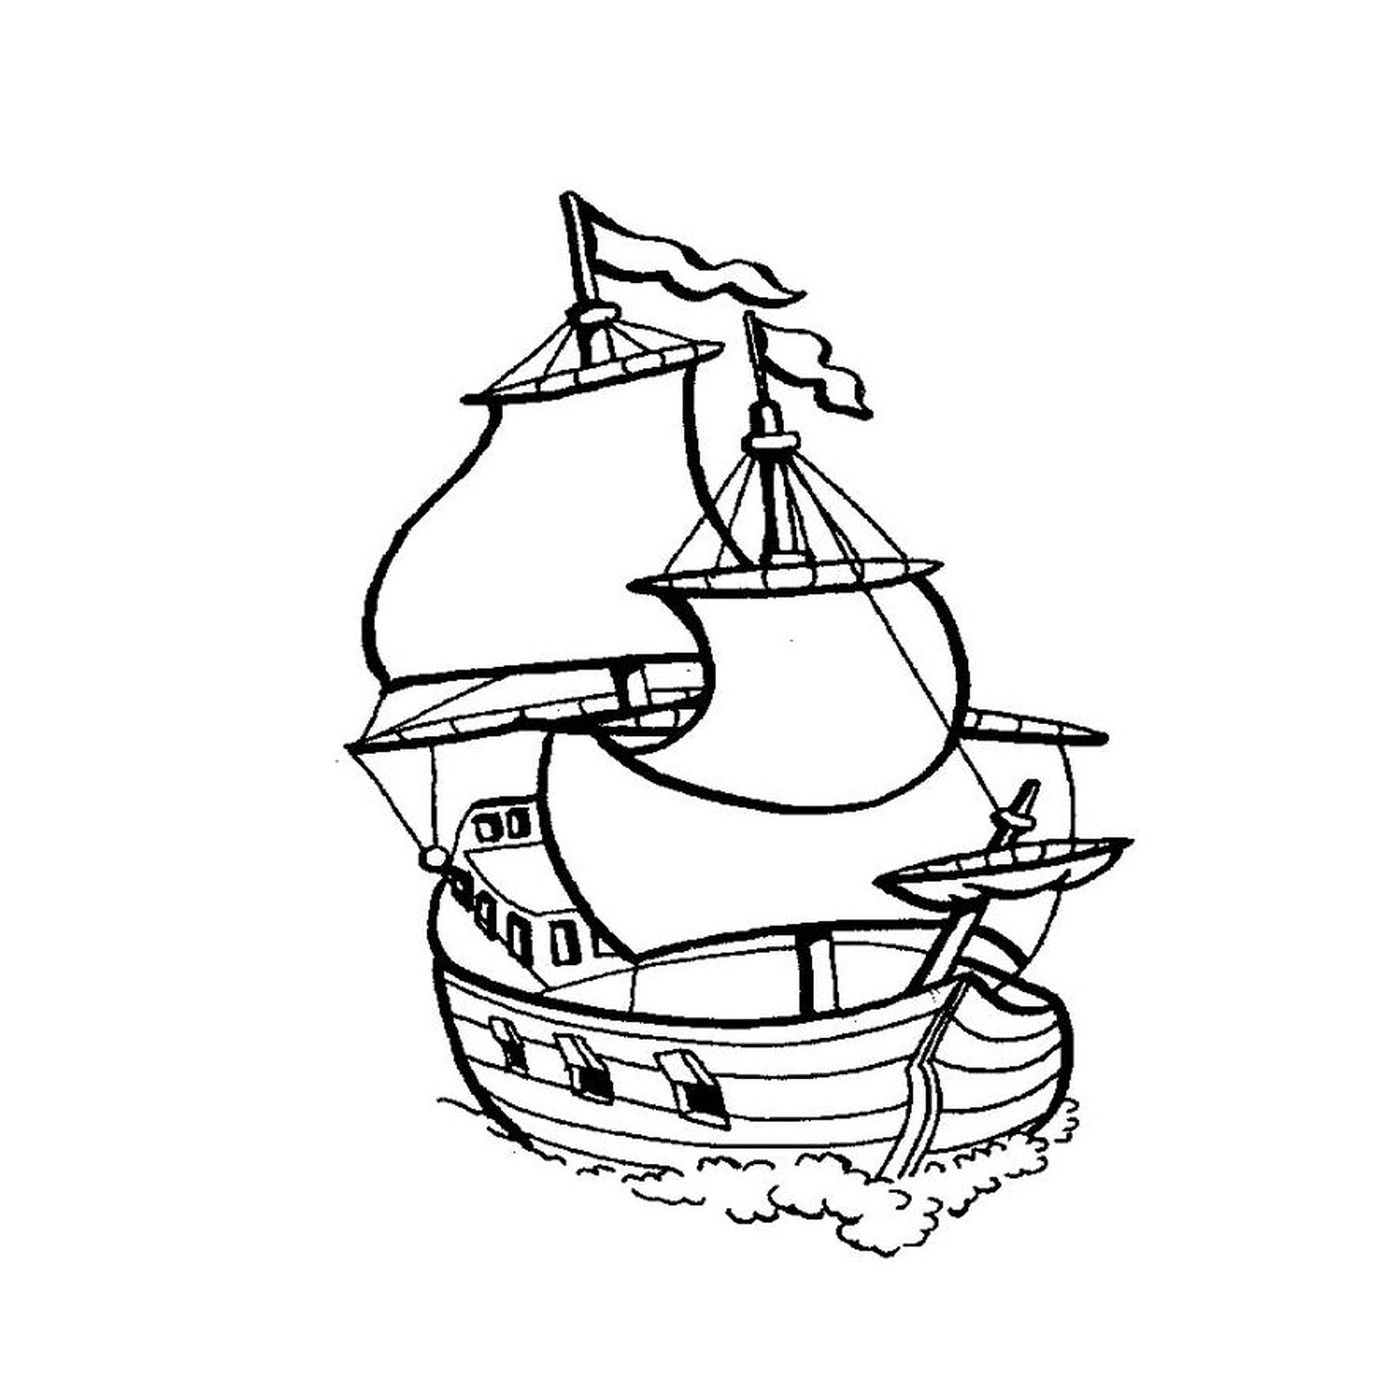  Um veleiro velho na água 